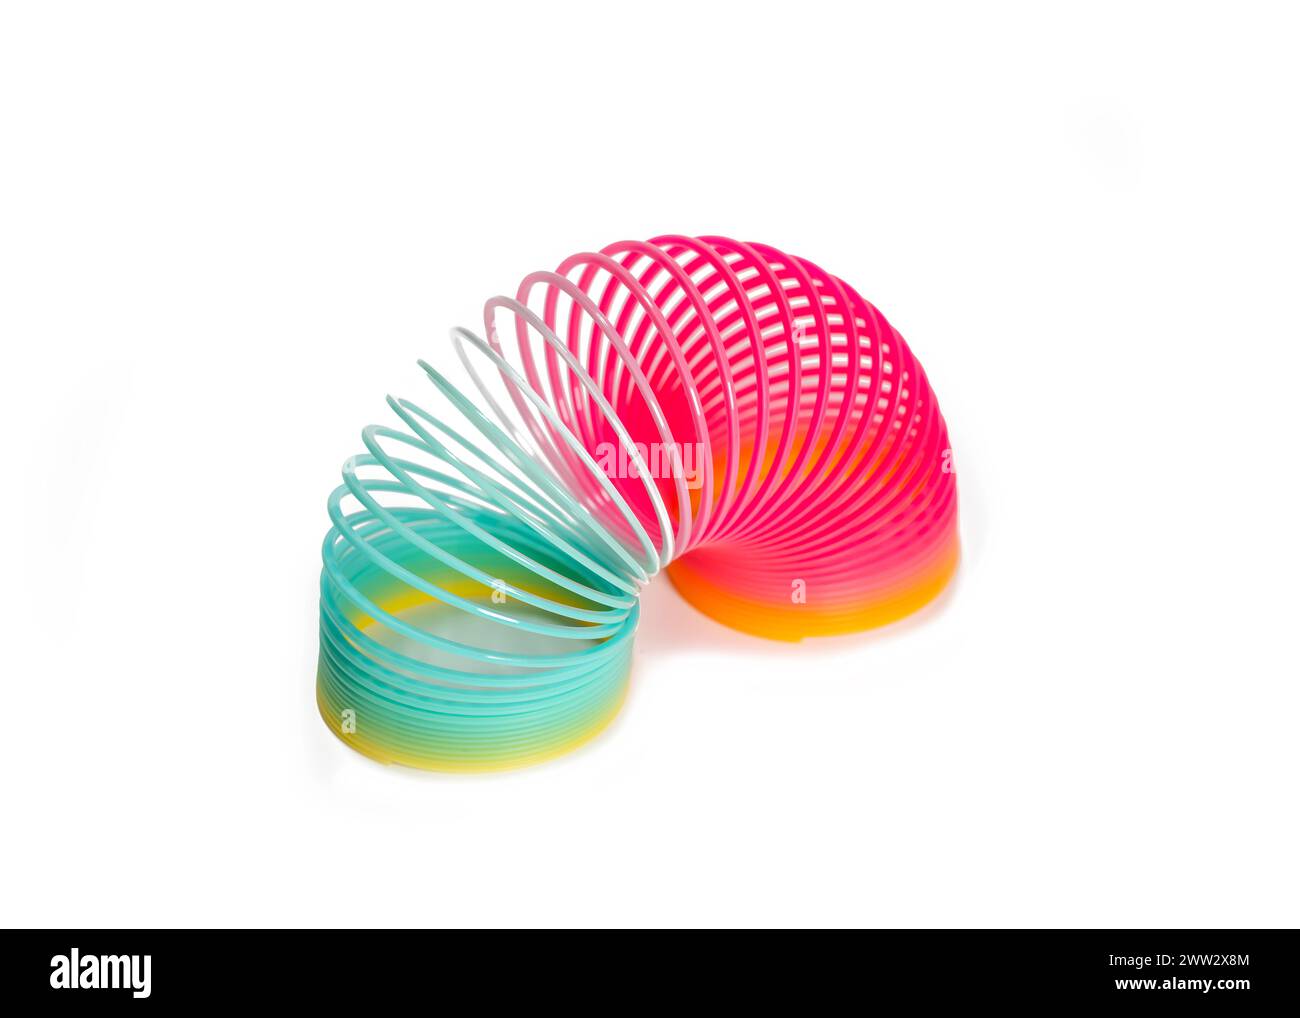 Slinky (Stress Spring Toy), Isolated On White Background Stock Photo